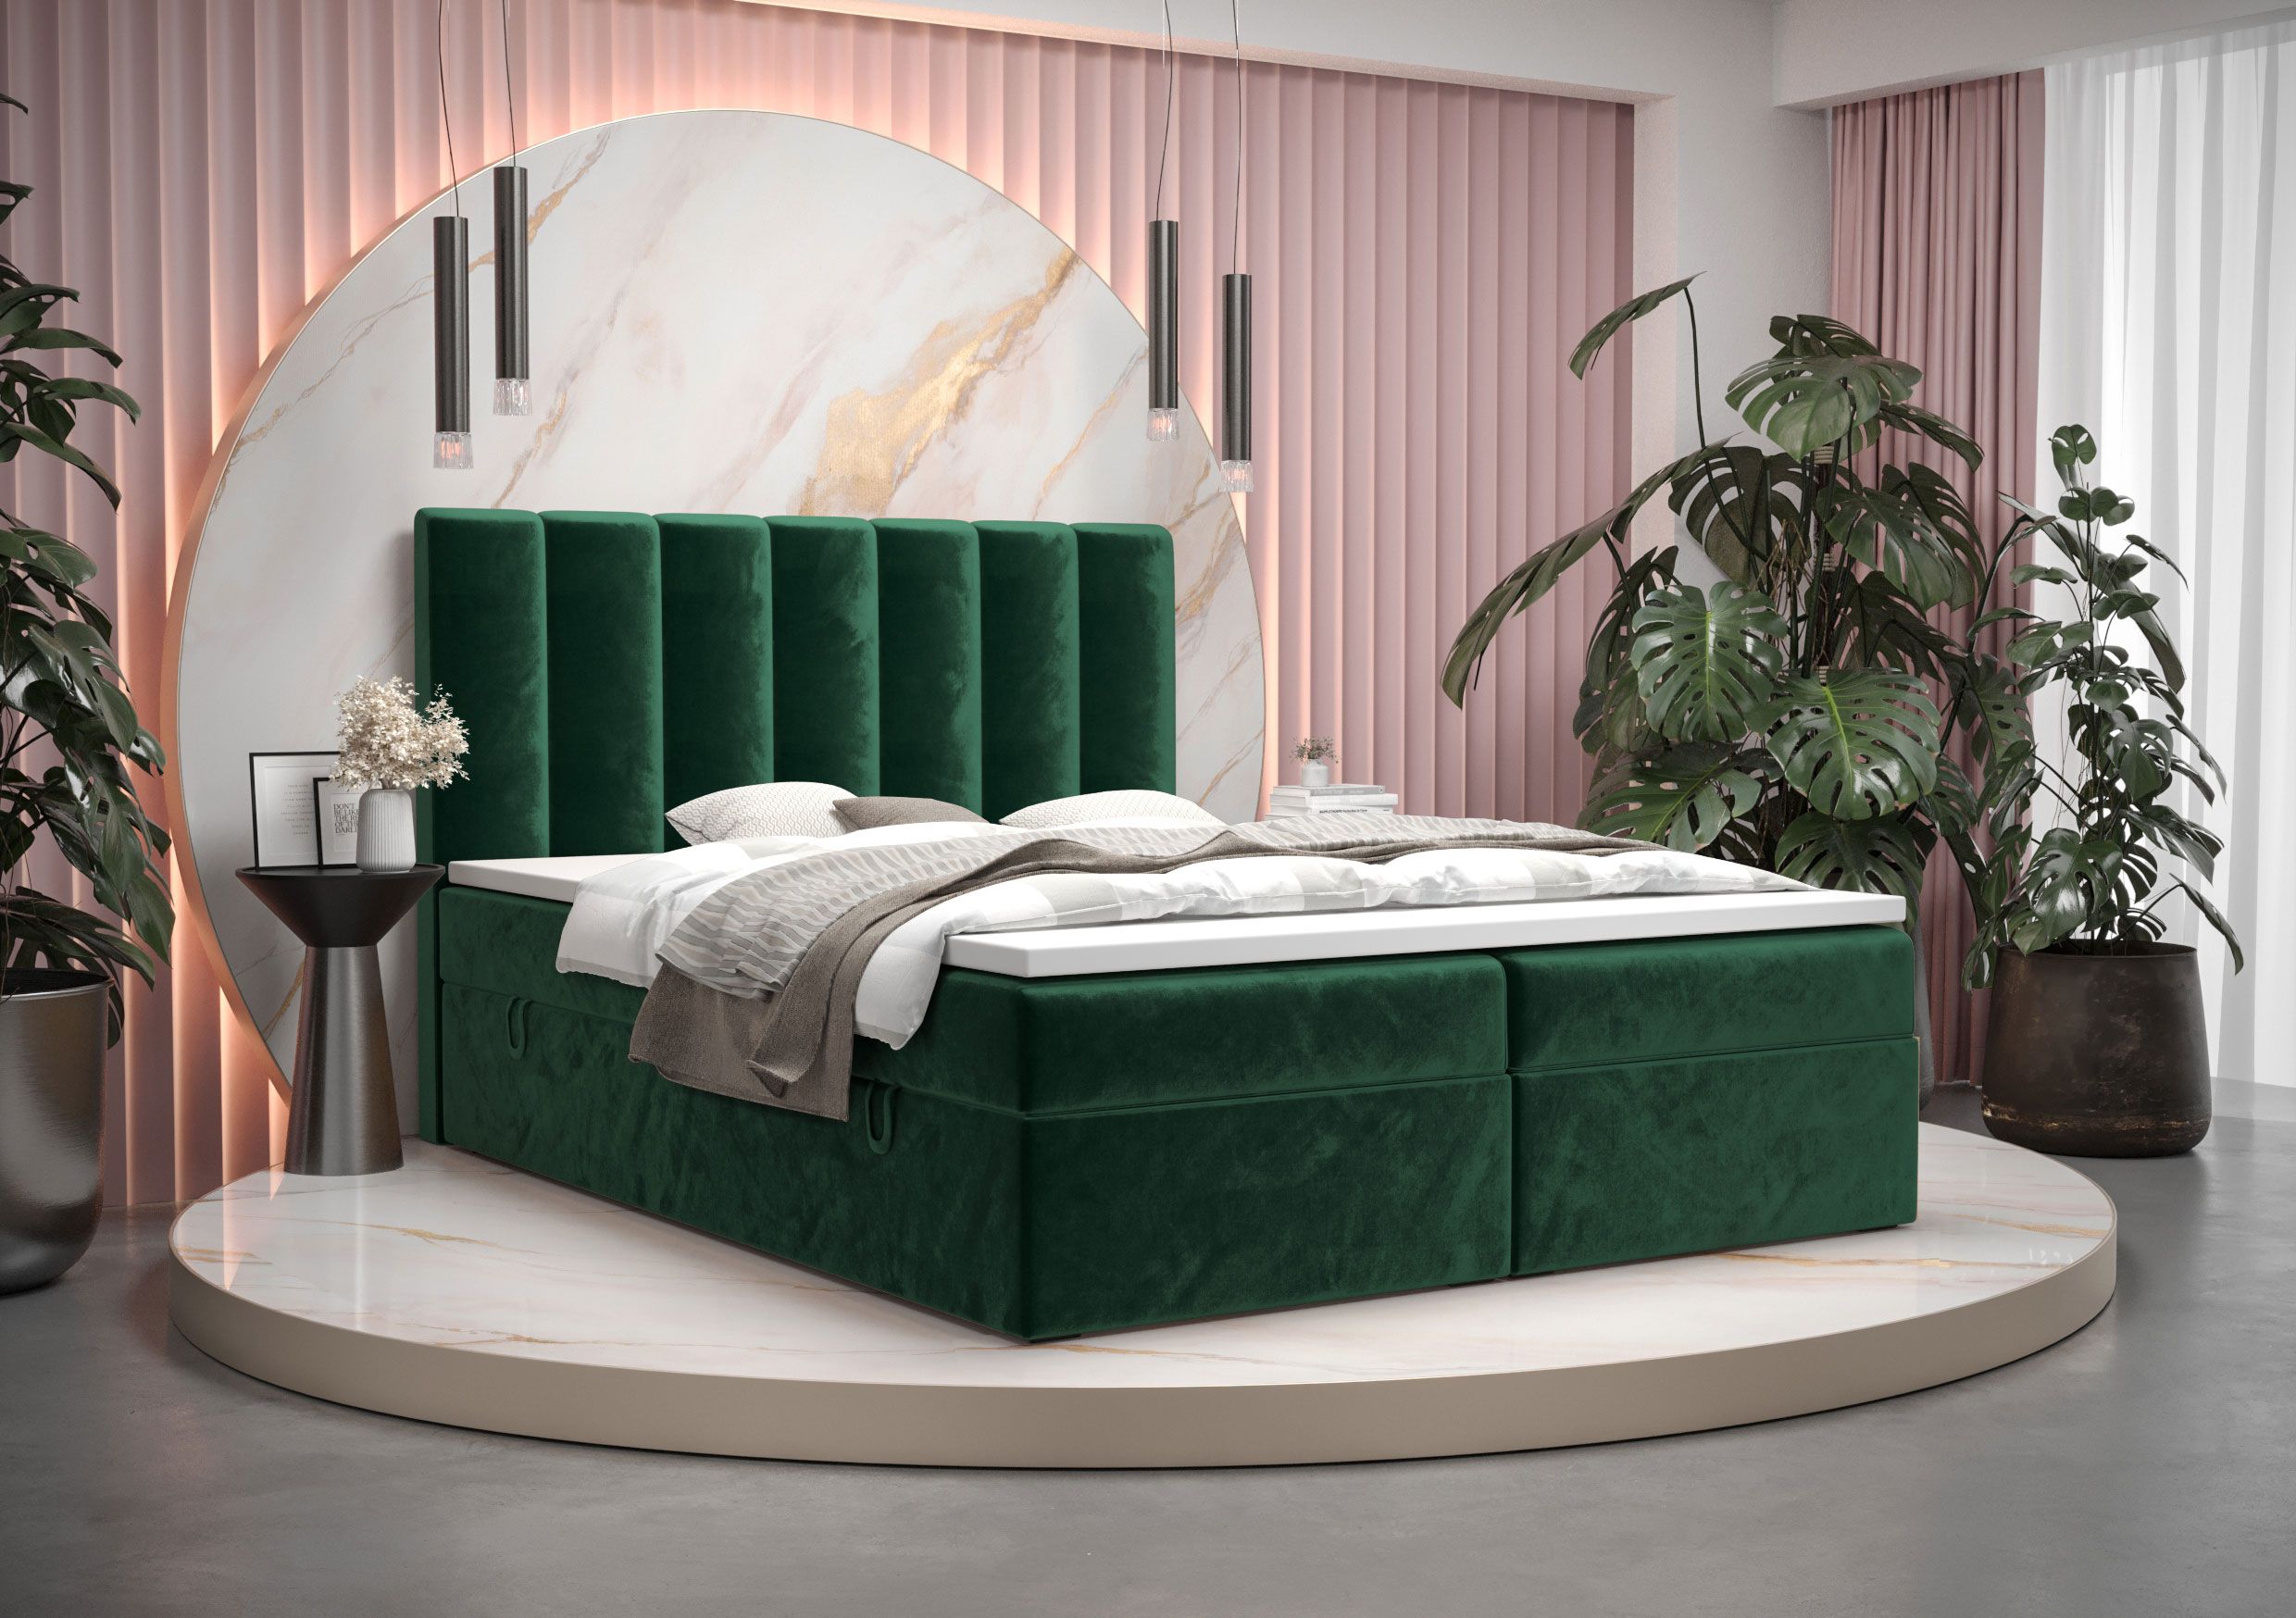 Doppelbett mit modernen Design Pirin 08, Farbe: Grün - Liegefläche: 160 x 200 cm (B x L)